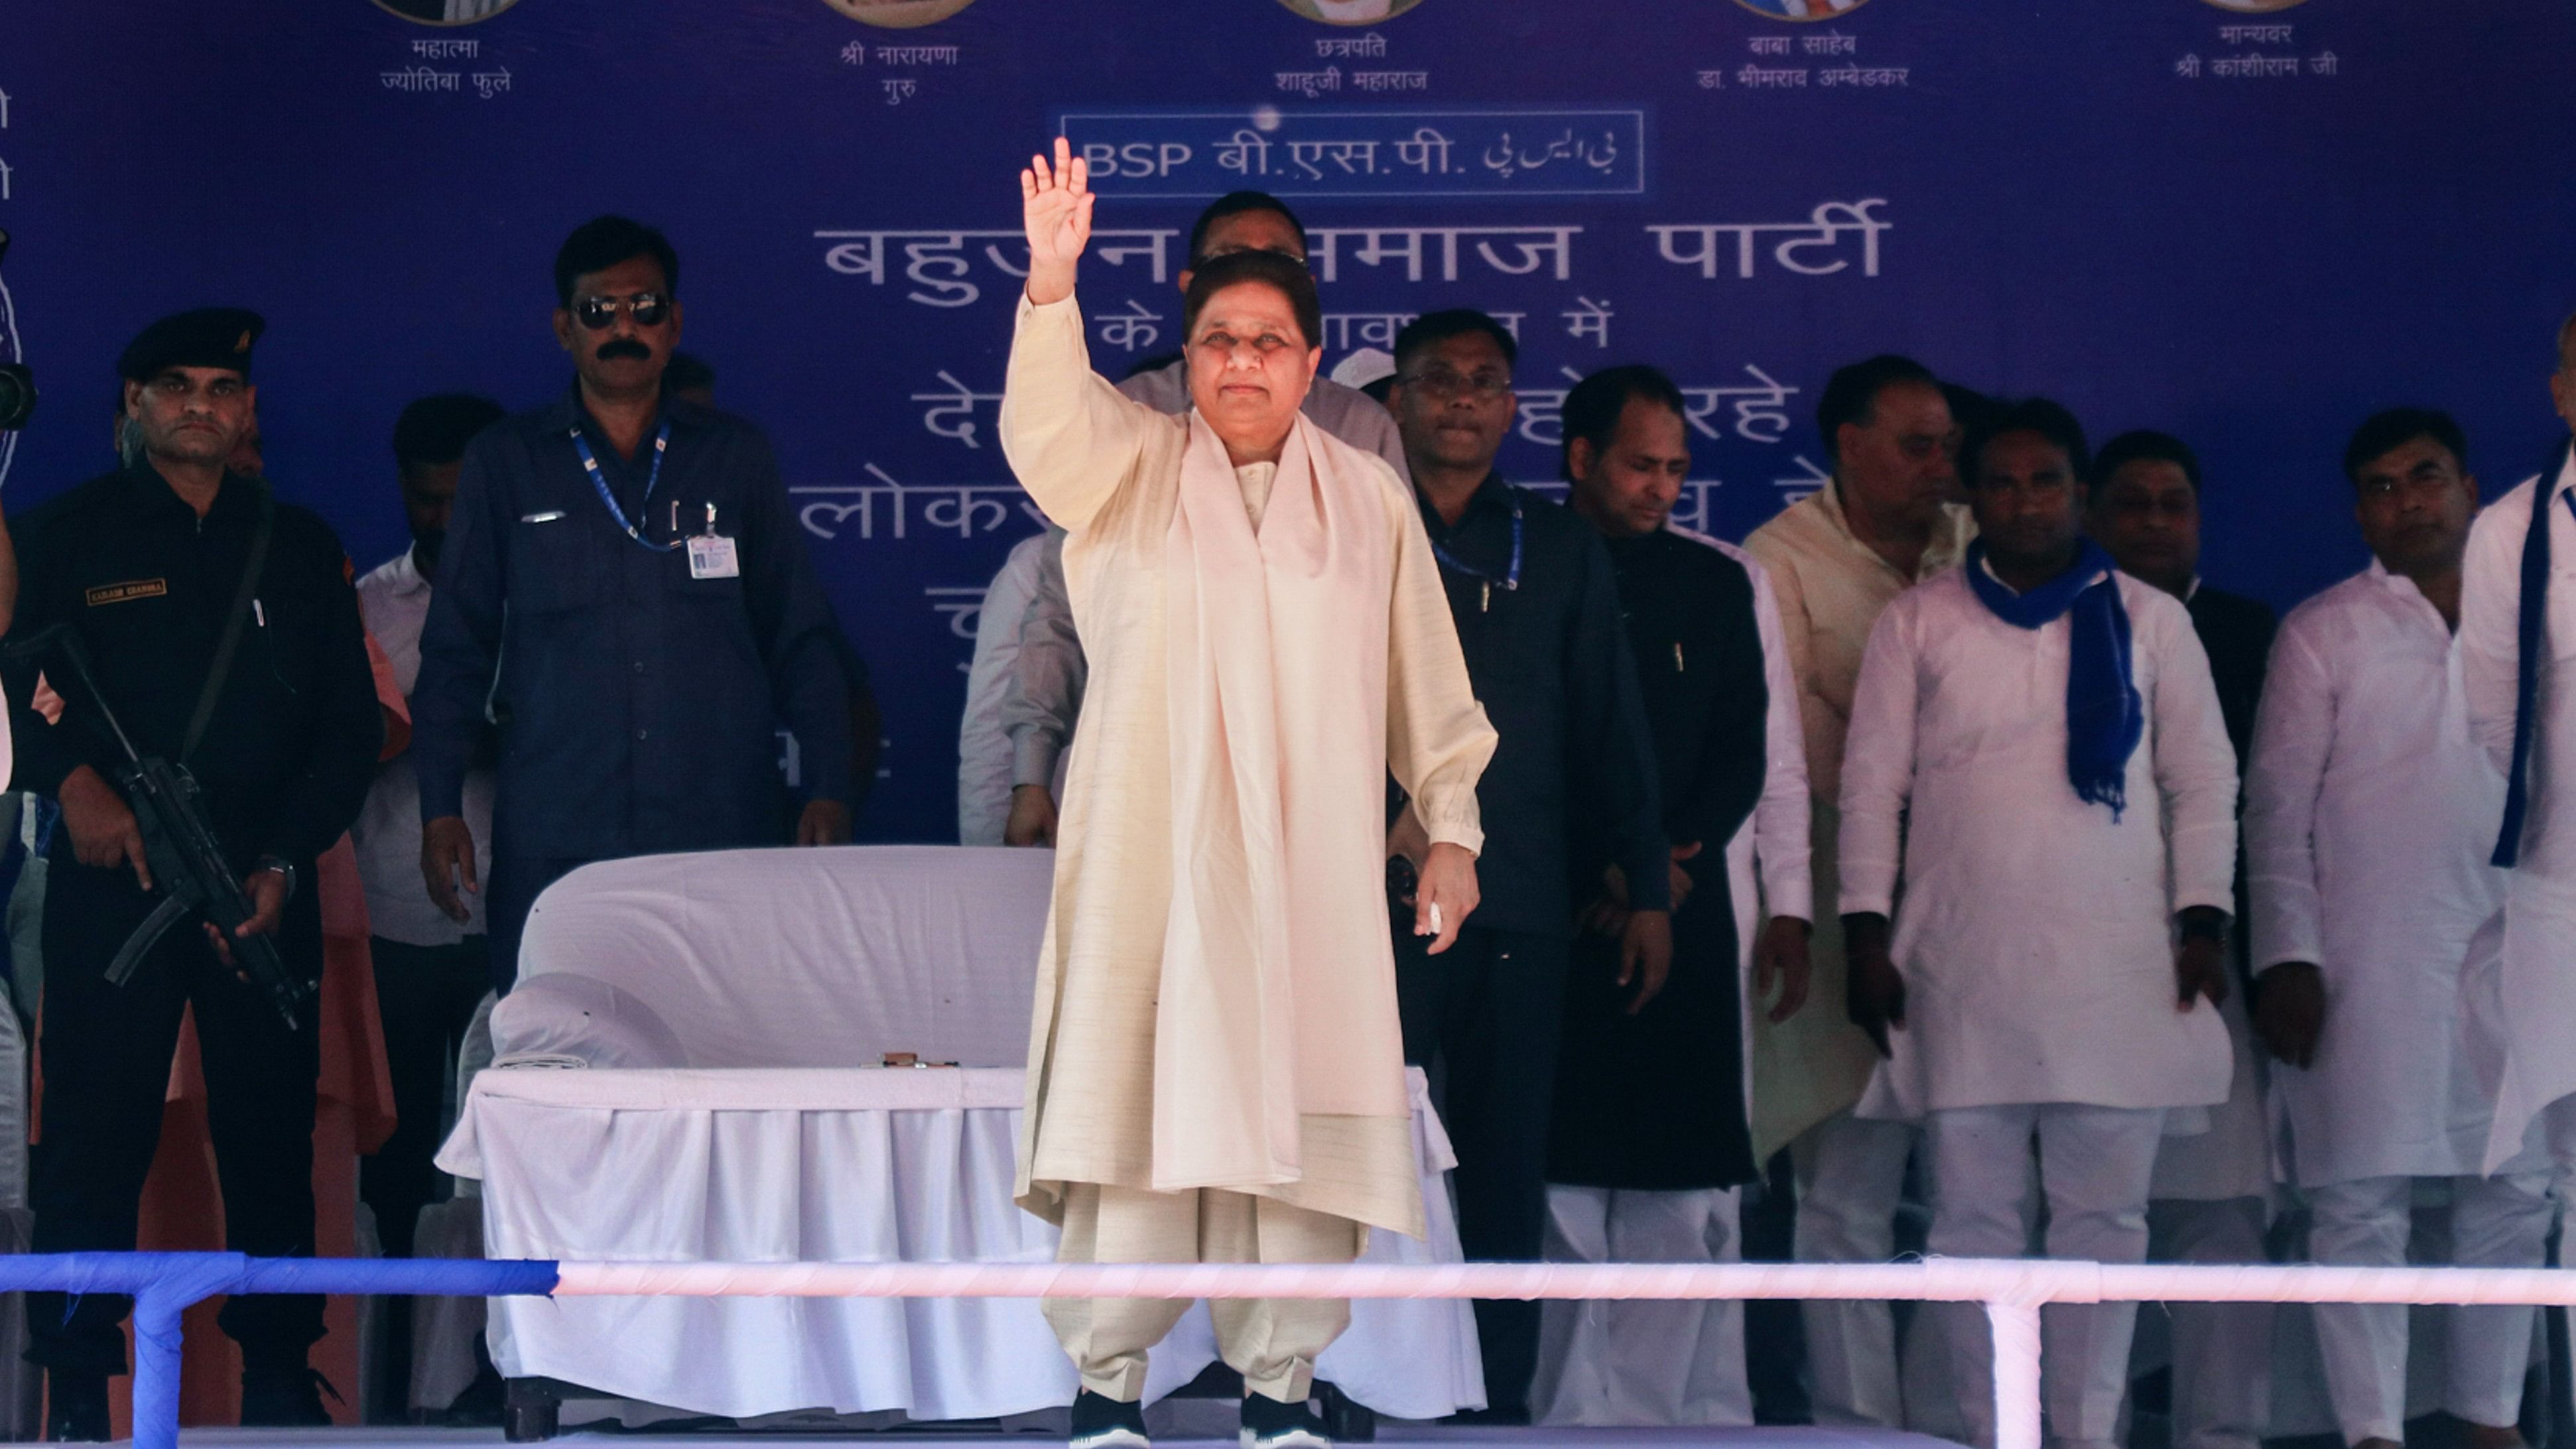 <div class="paragraphs"><p>BSP chief Mayawati during a public meeting.</p></div>